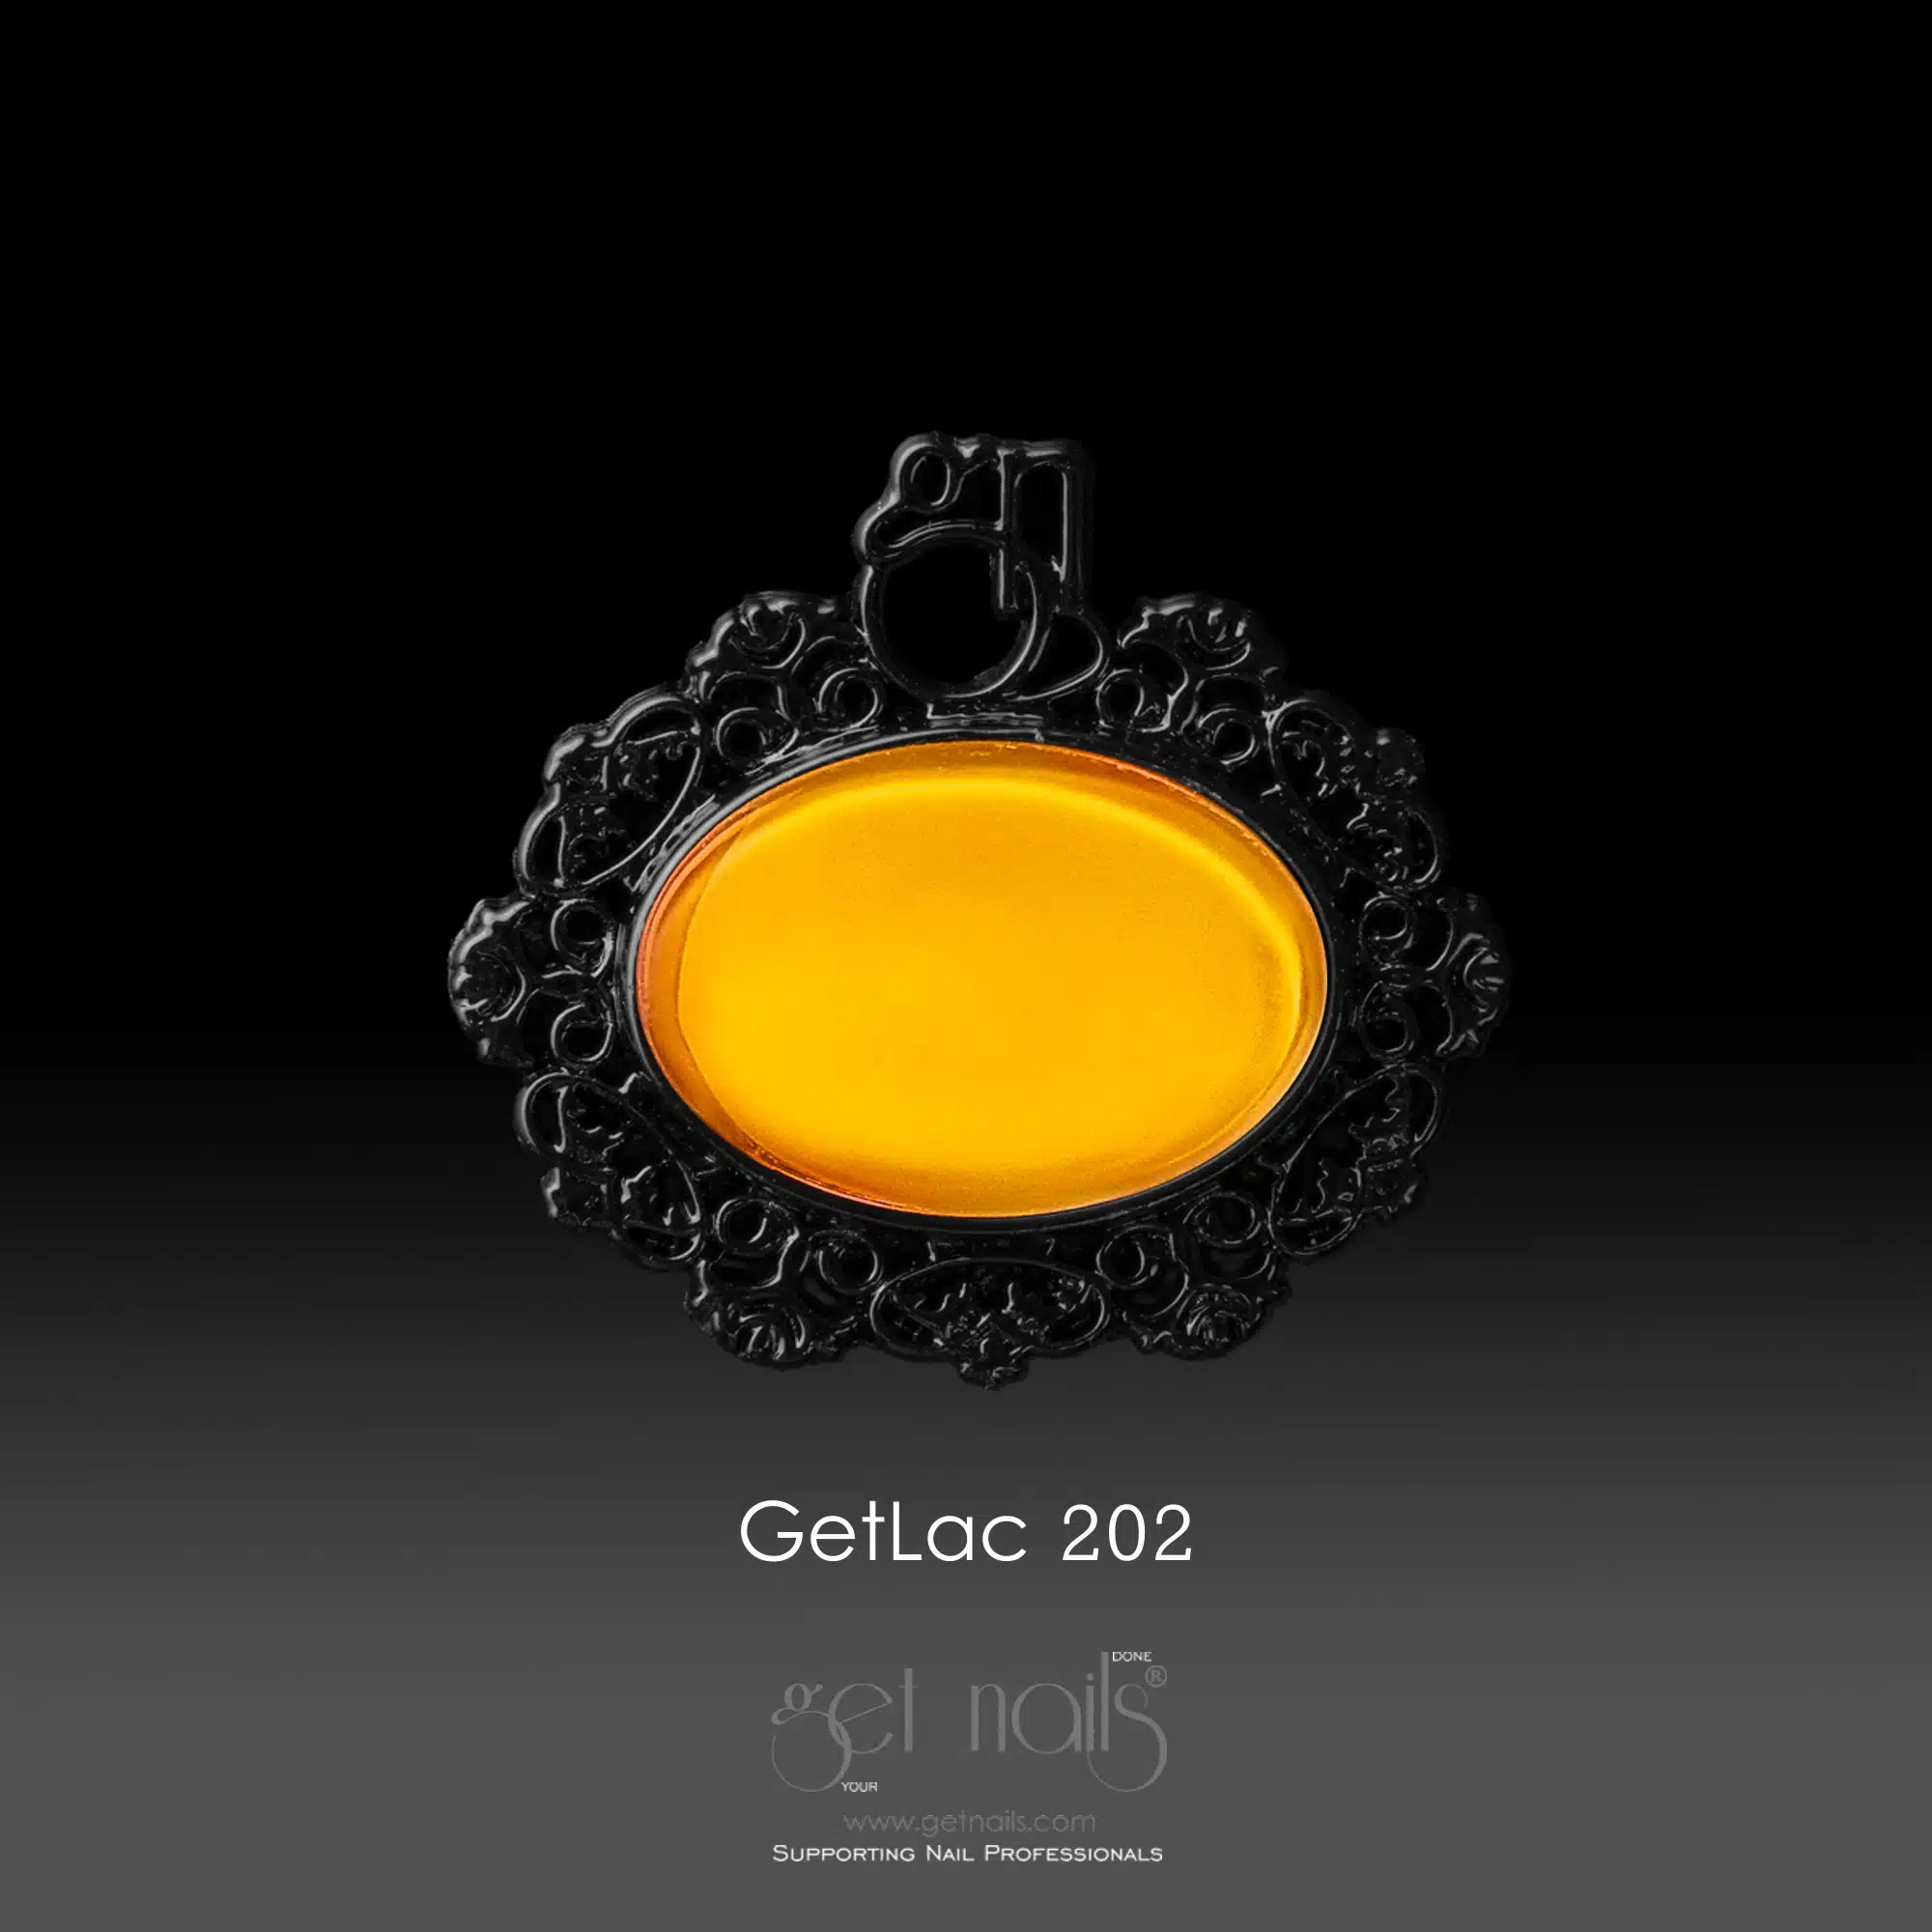 Get Nails Austria - GetLac 202 Sunflower 15g